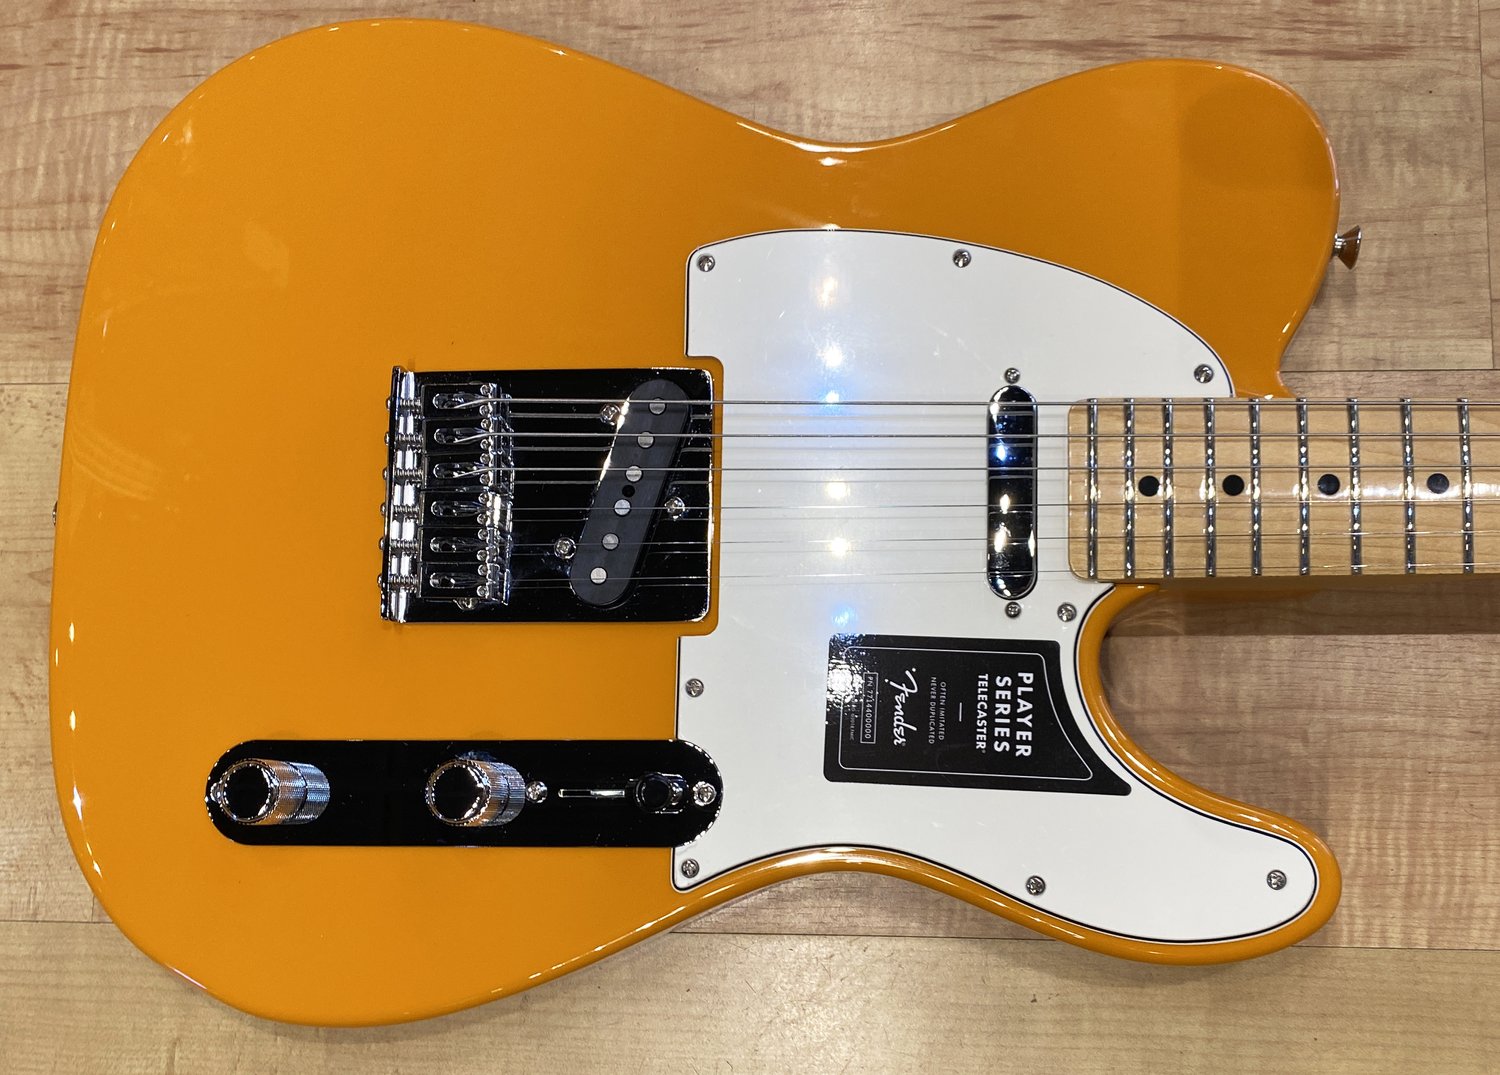 Fender Series Telecaster Guitar Capri Orange Andy Fab Gear